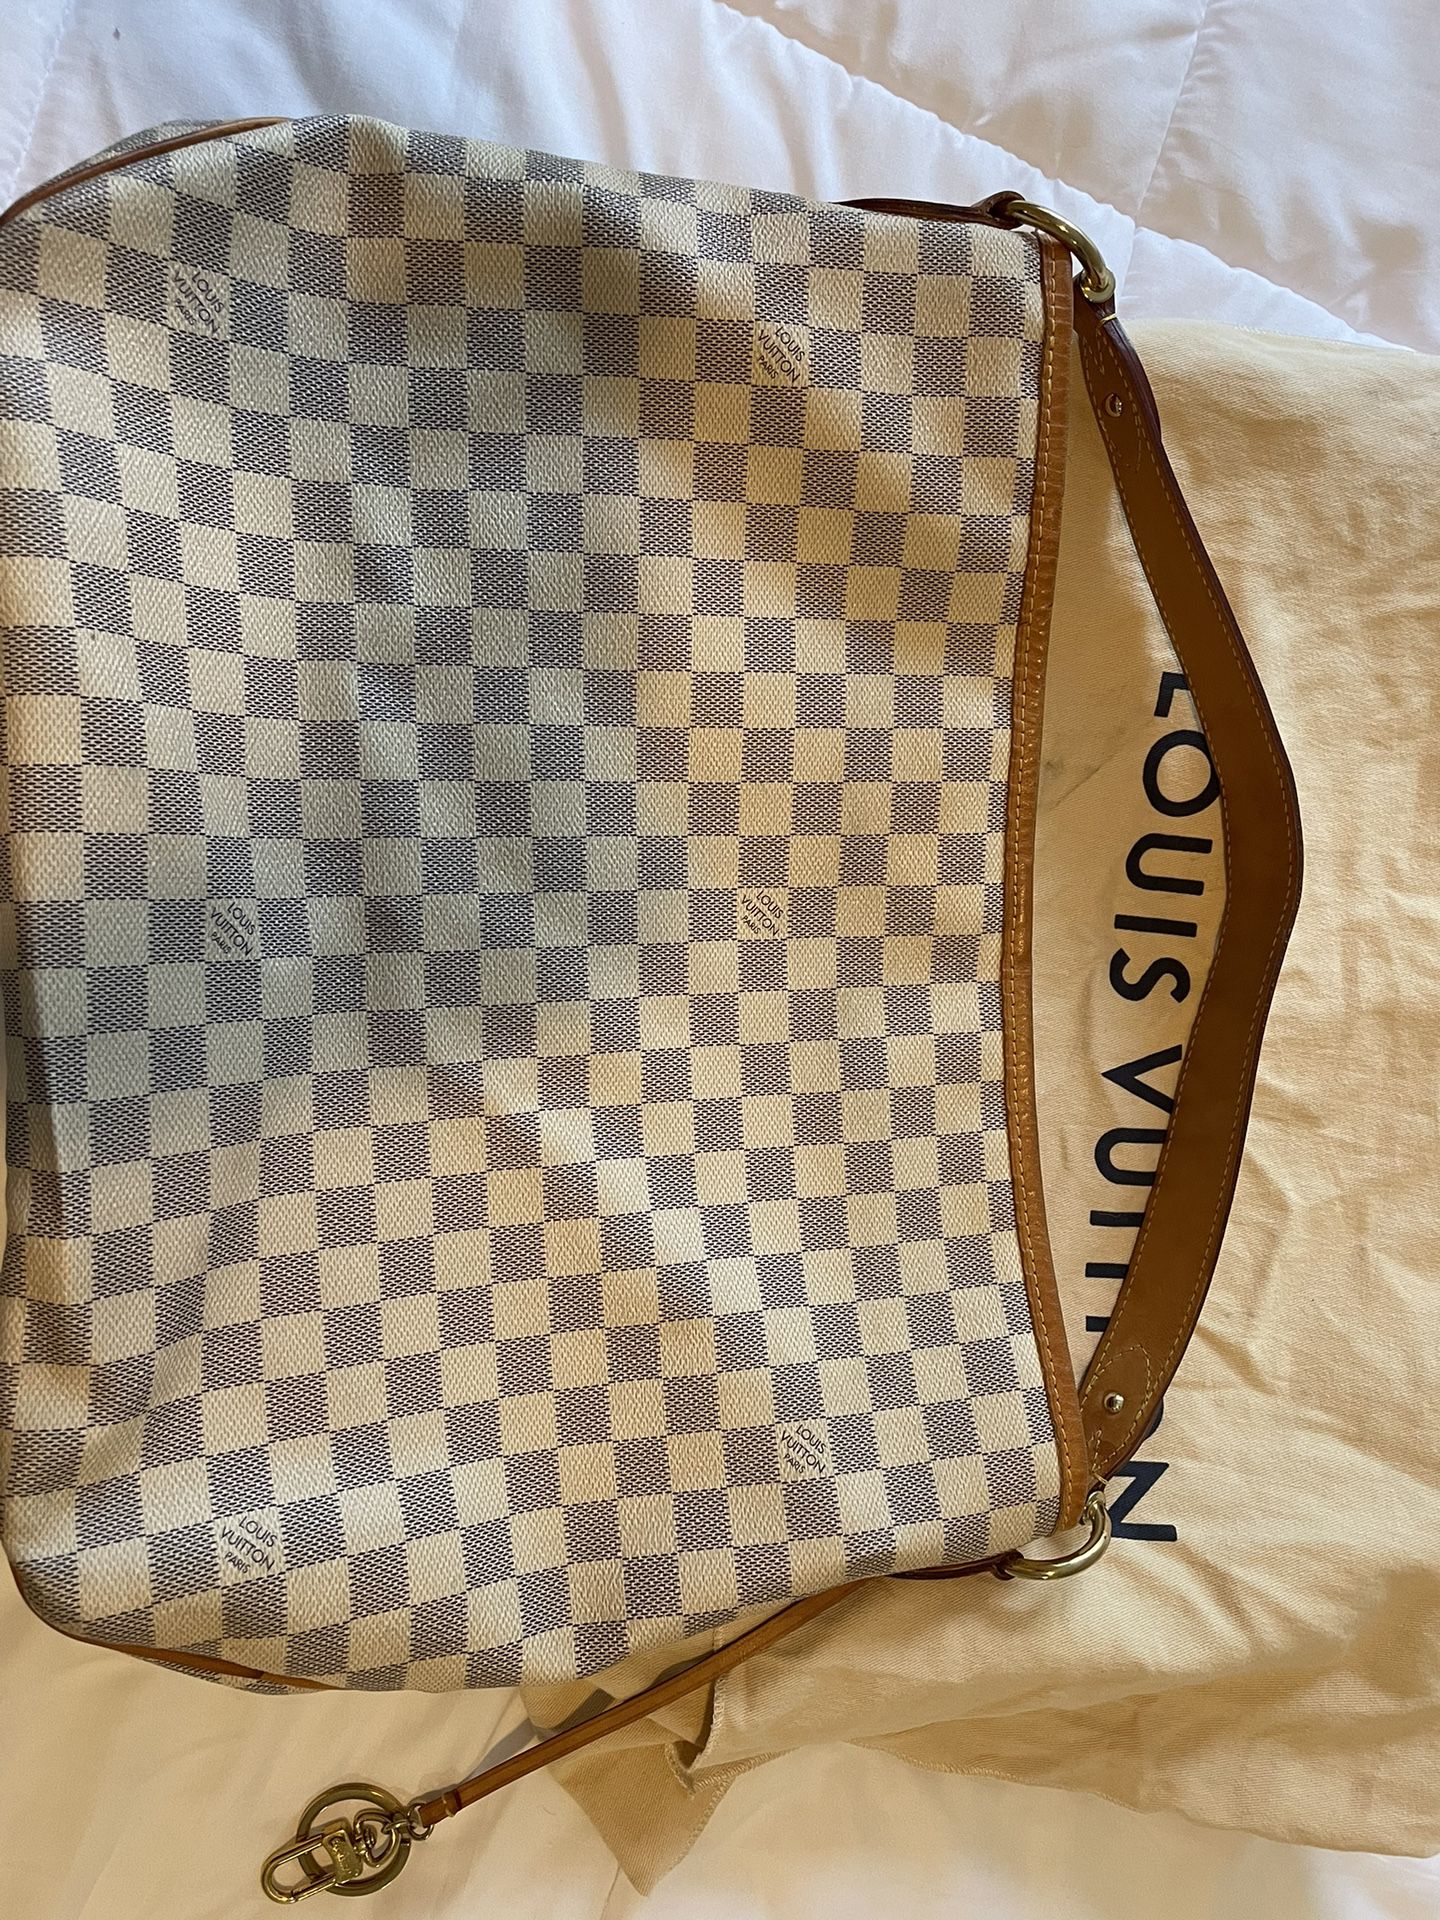 Authentic LOUIS VUITTON Bag Purse for Sale in Panama City Beach, FL -  OfferUp